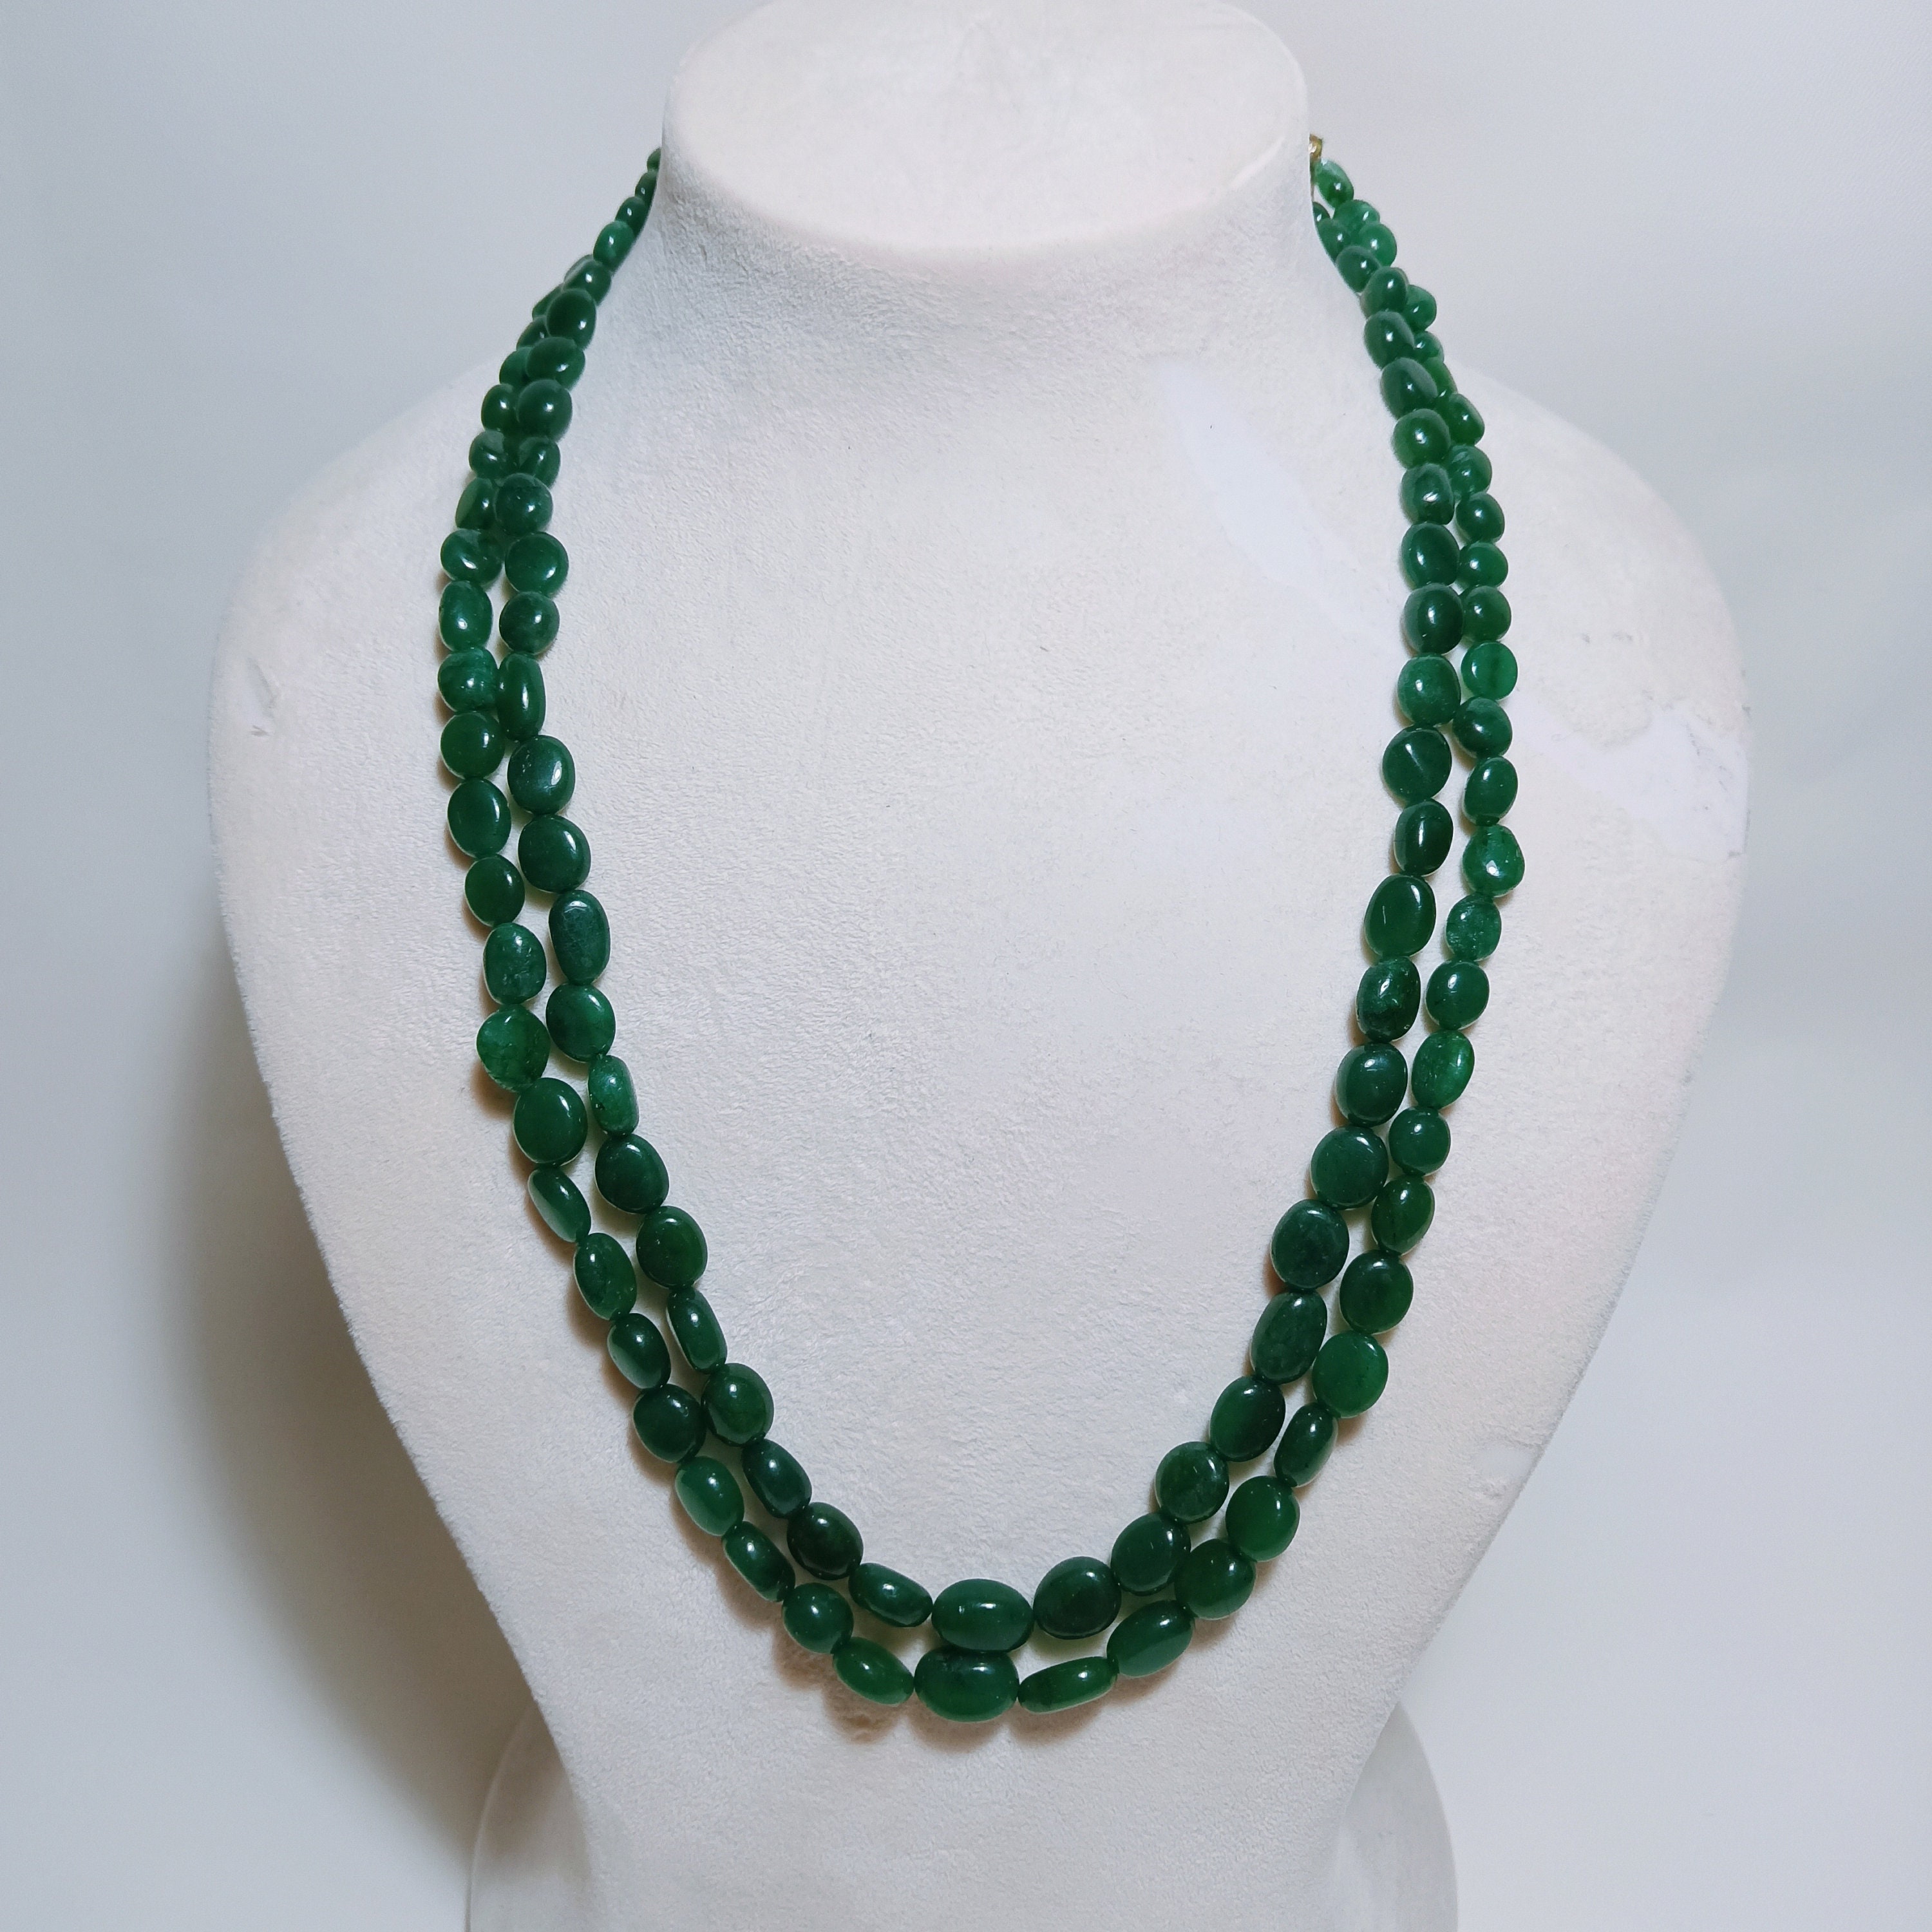 Beryl emerald necklace beautiful beryl necklace very low price | Etsy